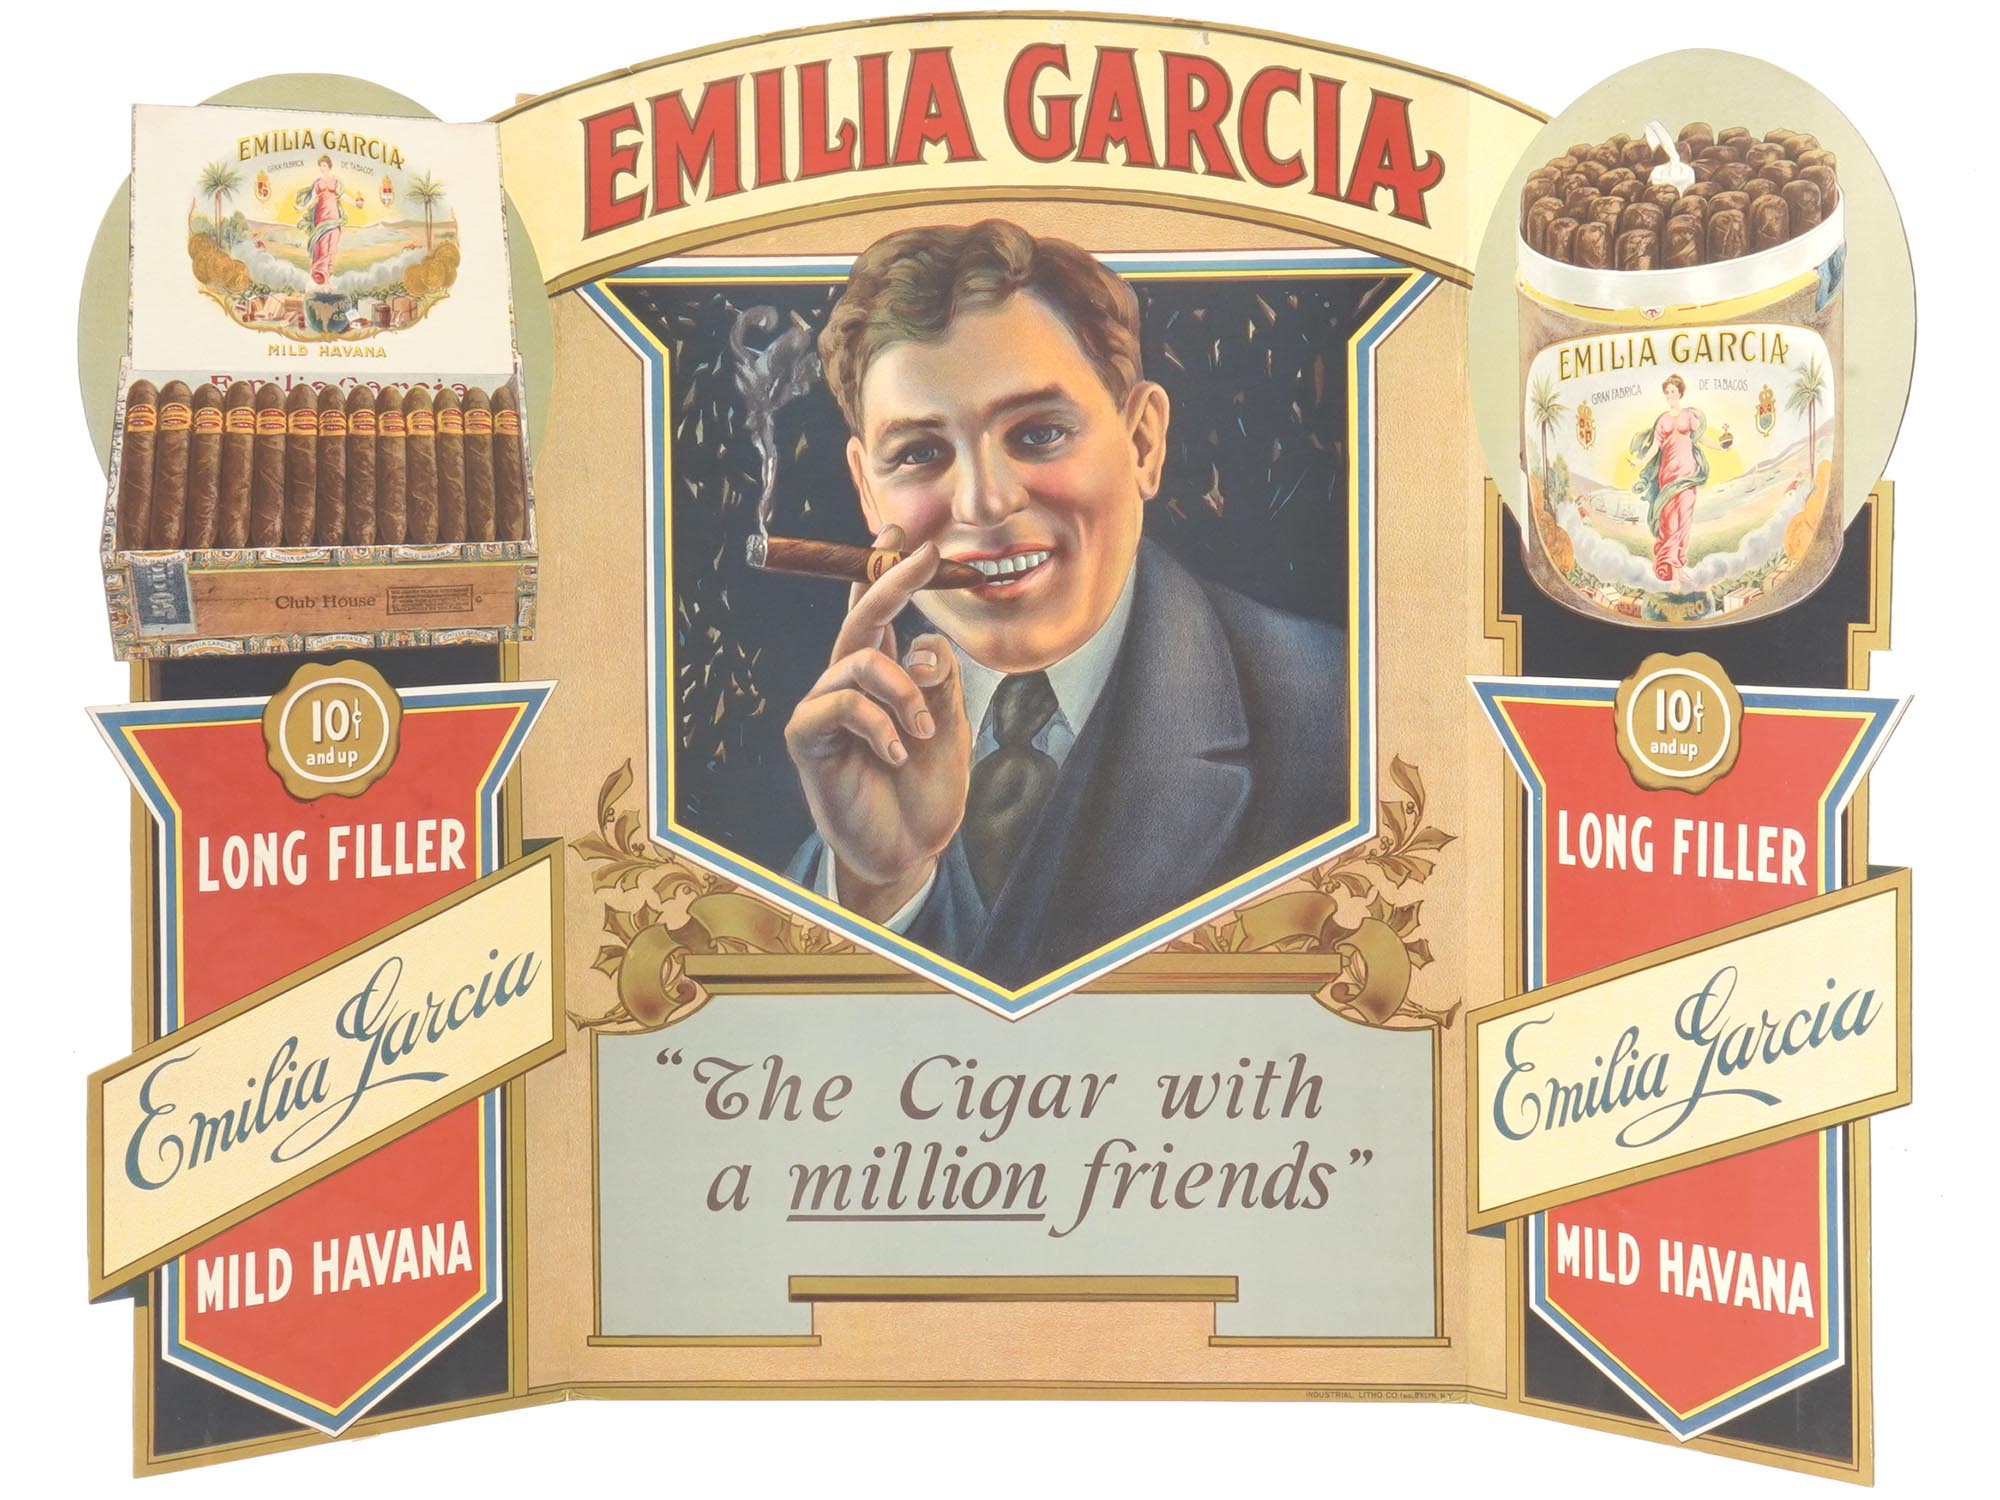 EMILIA GARCIA CIGARS CARDBOARD ADVERTISING SIGN PIC-0